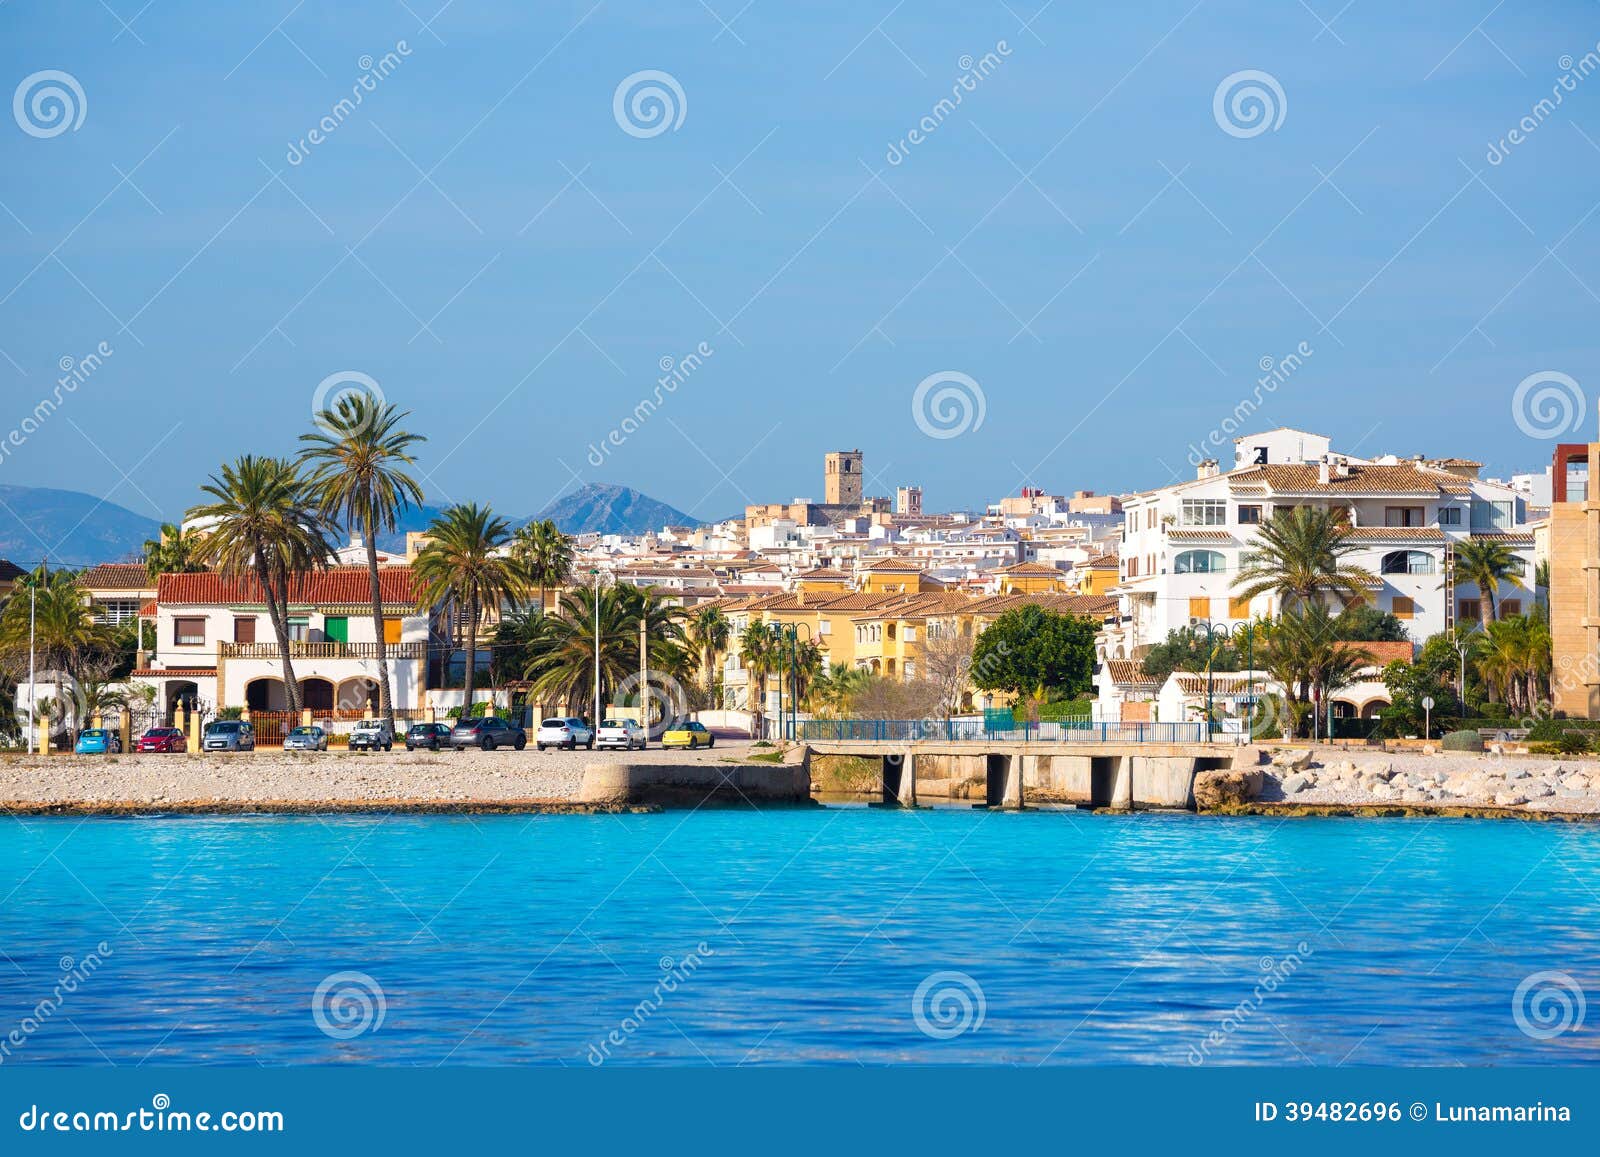 javea xabia skyline from mediterranean sea spain